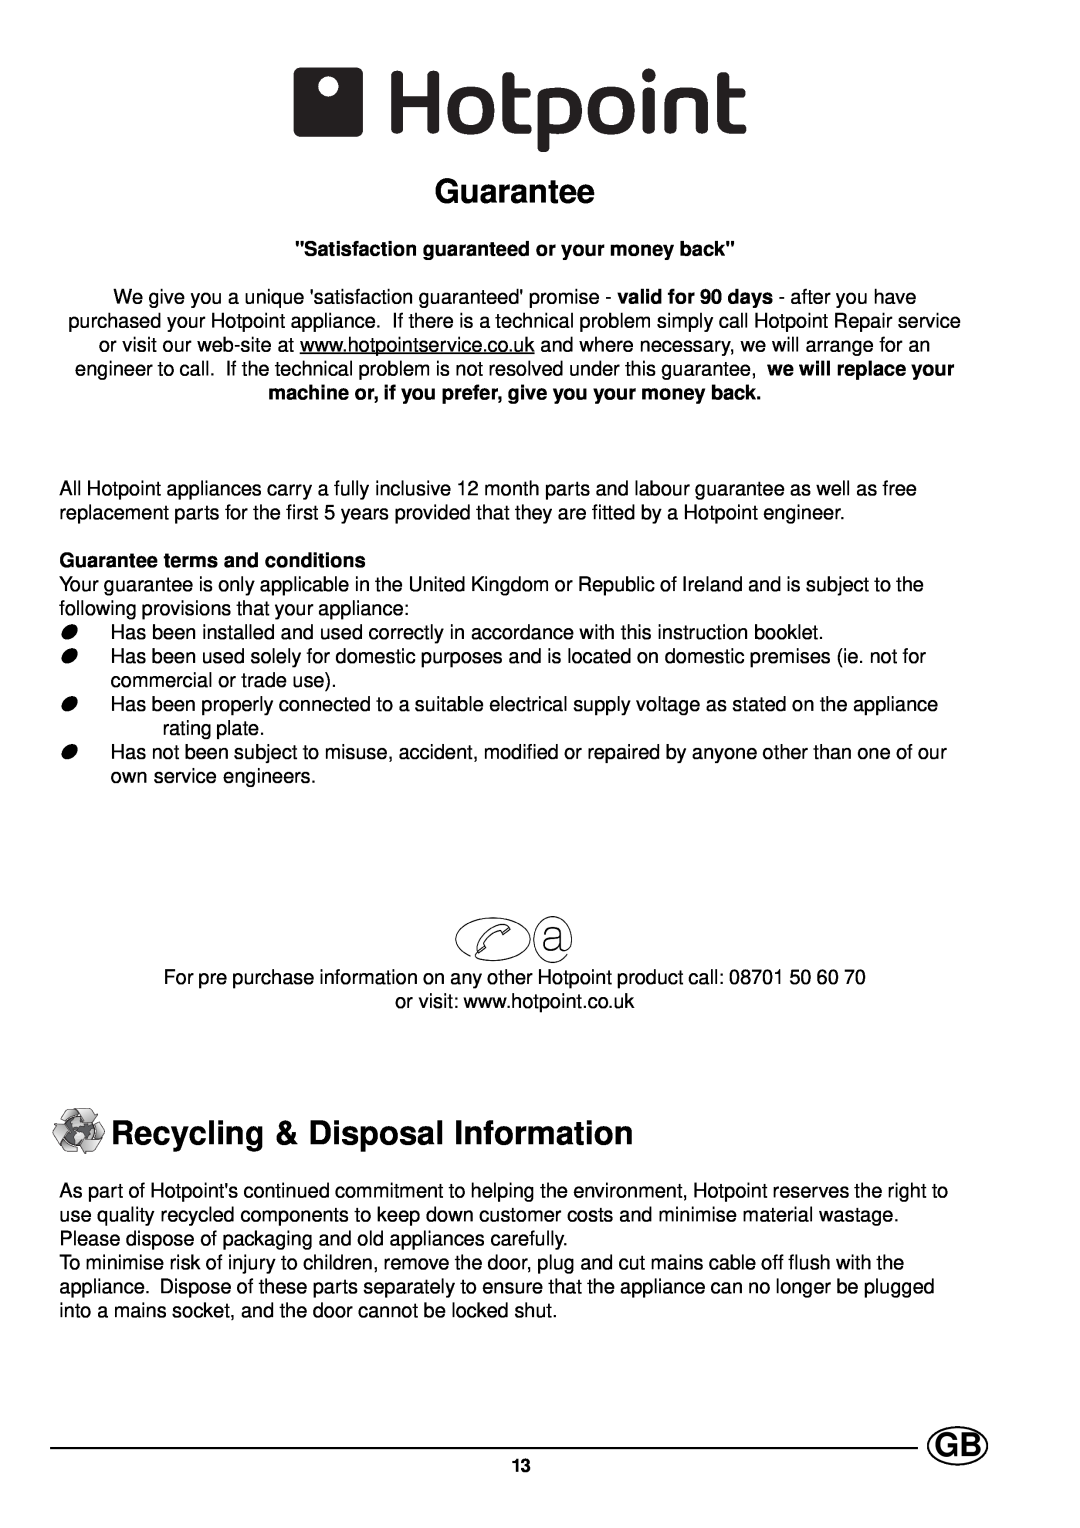 Hotpoint E6005, E7134 manual Guarantee, Recycling & Disposal Information, Satisfaction guaranteed or your money back 